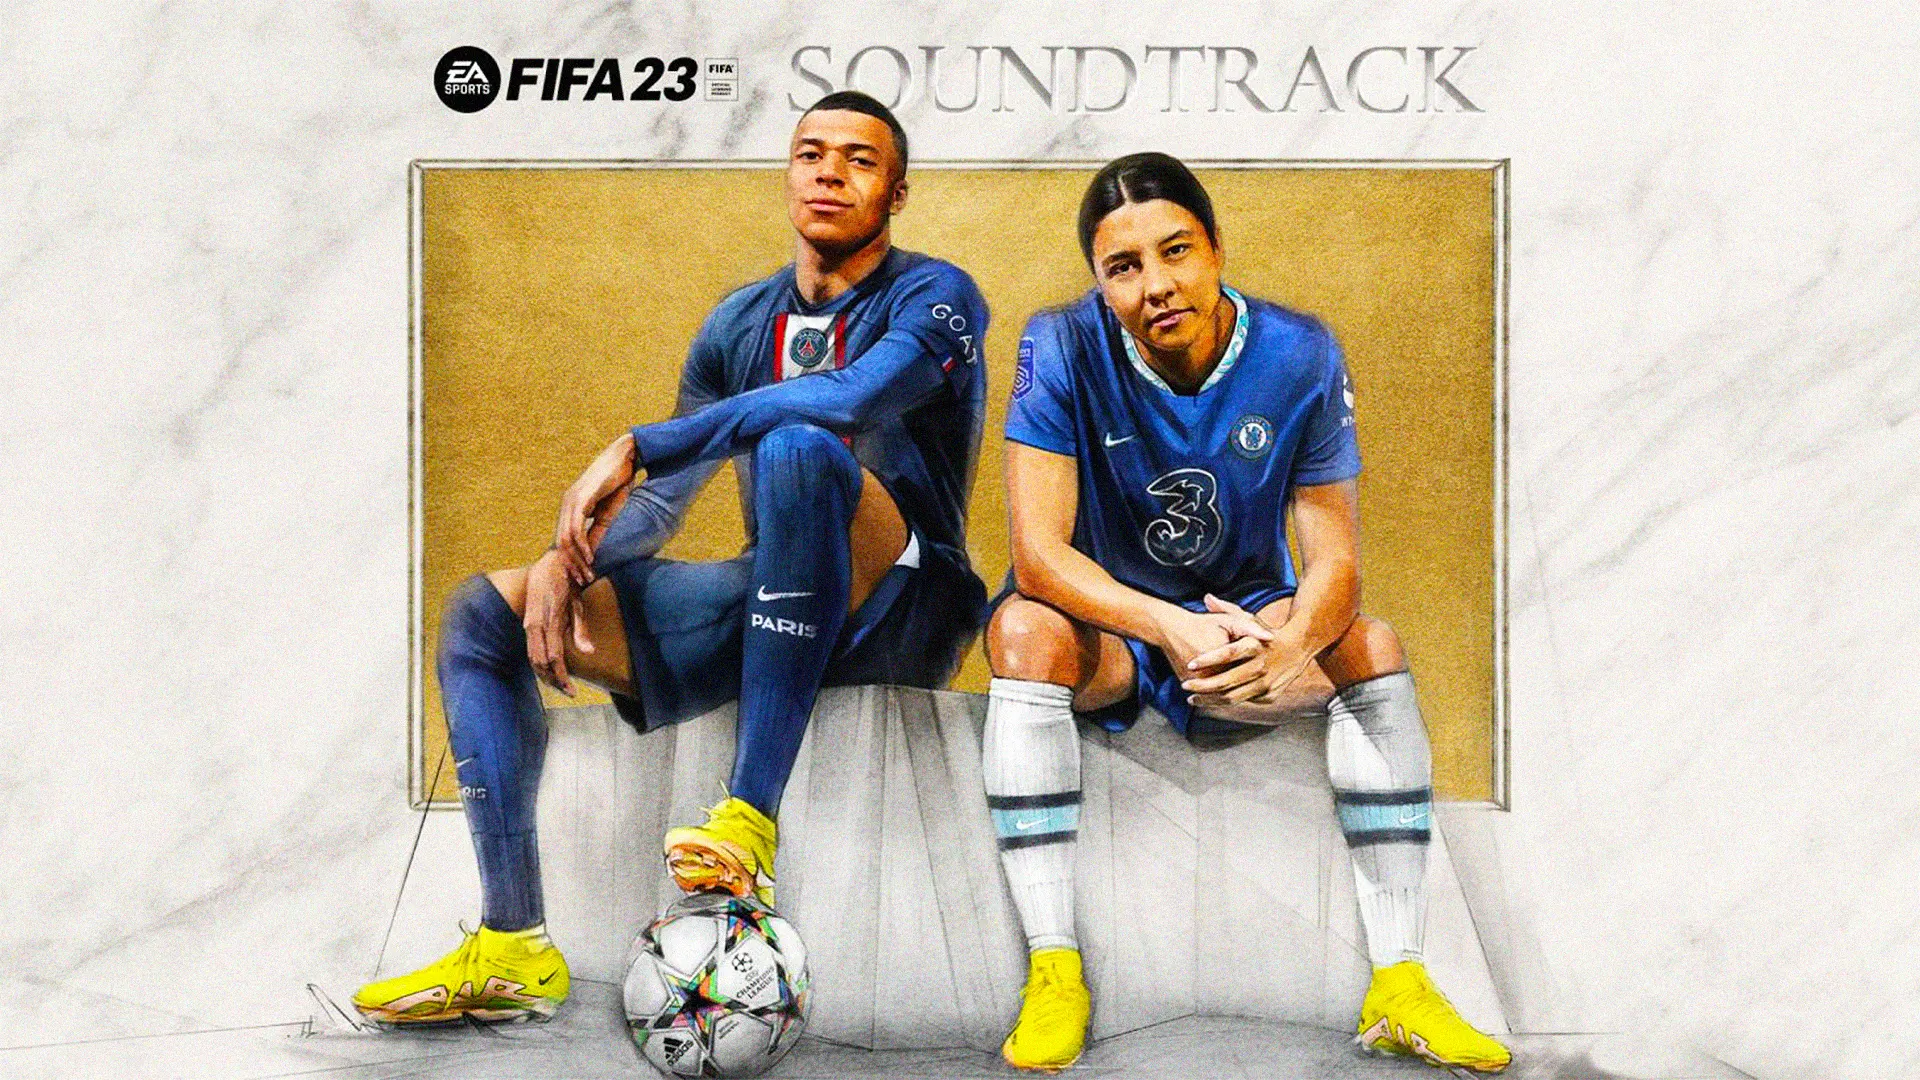 Tá pesada! EA Games divulga soundtrack definitiva de FIFA 23 2022 Viciados